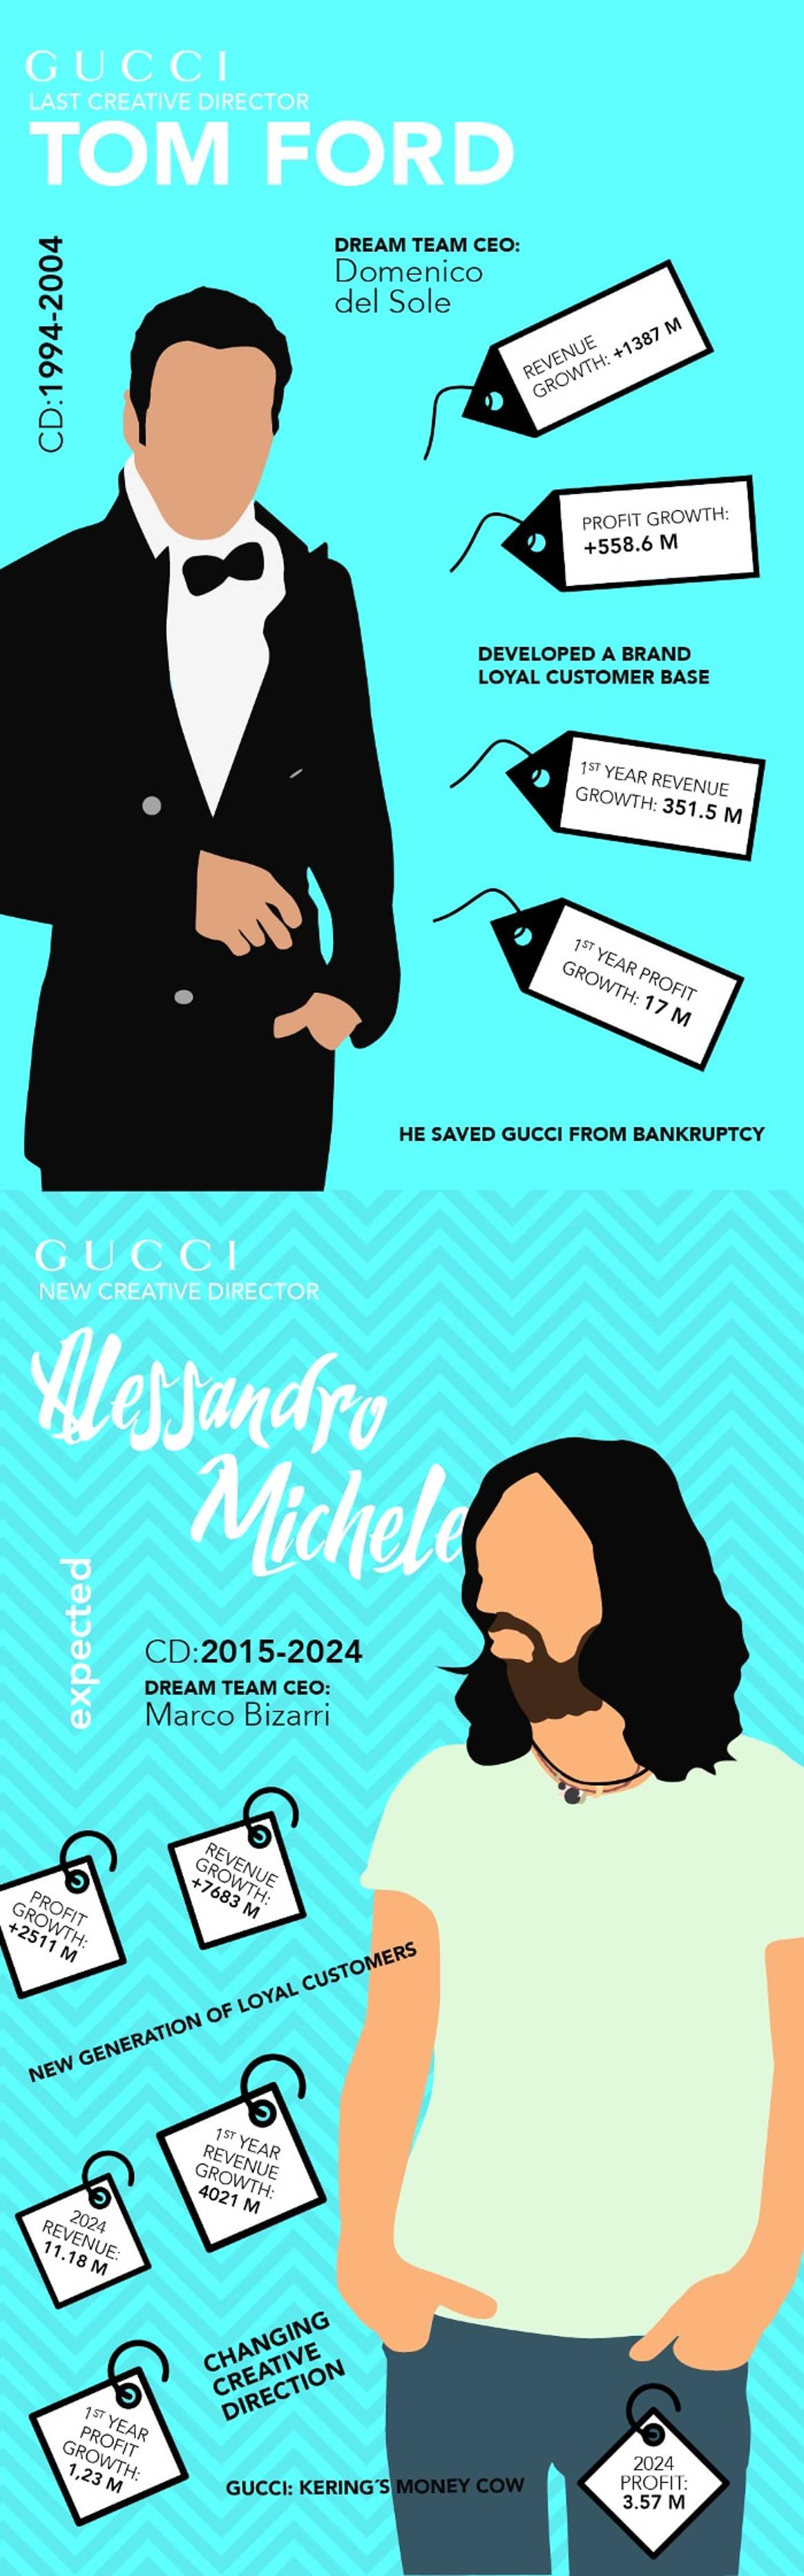 Geek-chic of seksbom: de verschillen tussen Gucci's Alessandro Michele en Tom Ford